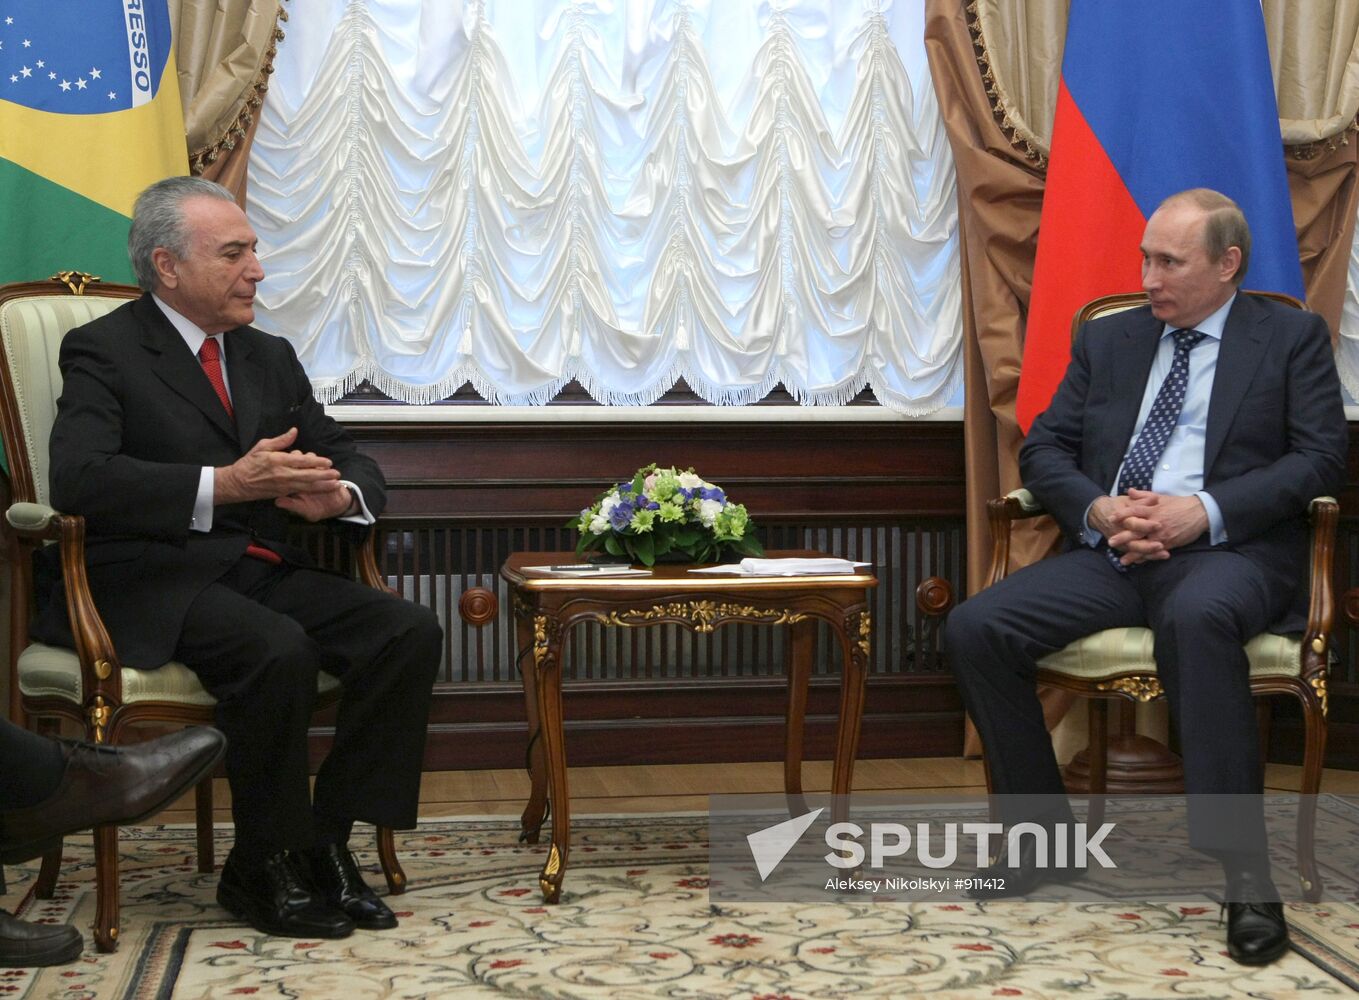 Vladimir Putin meets Michel Temer